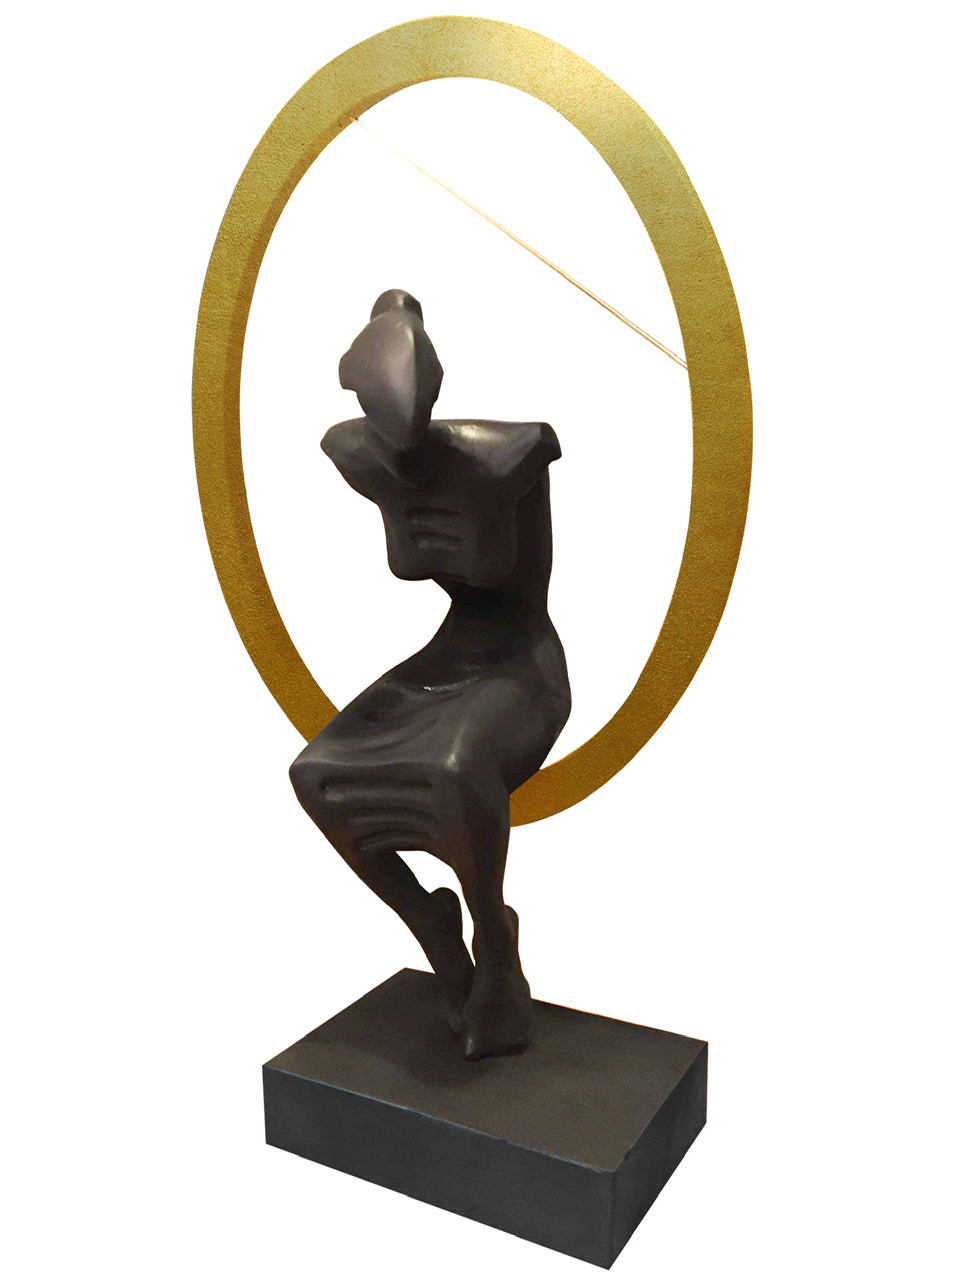 Engy El-Bouliny, Untitled (2020), bronze